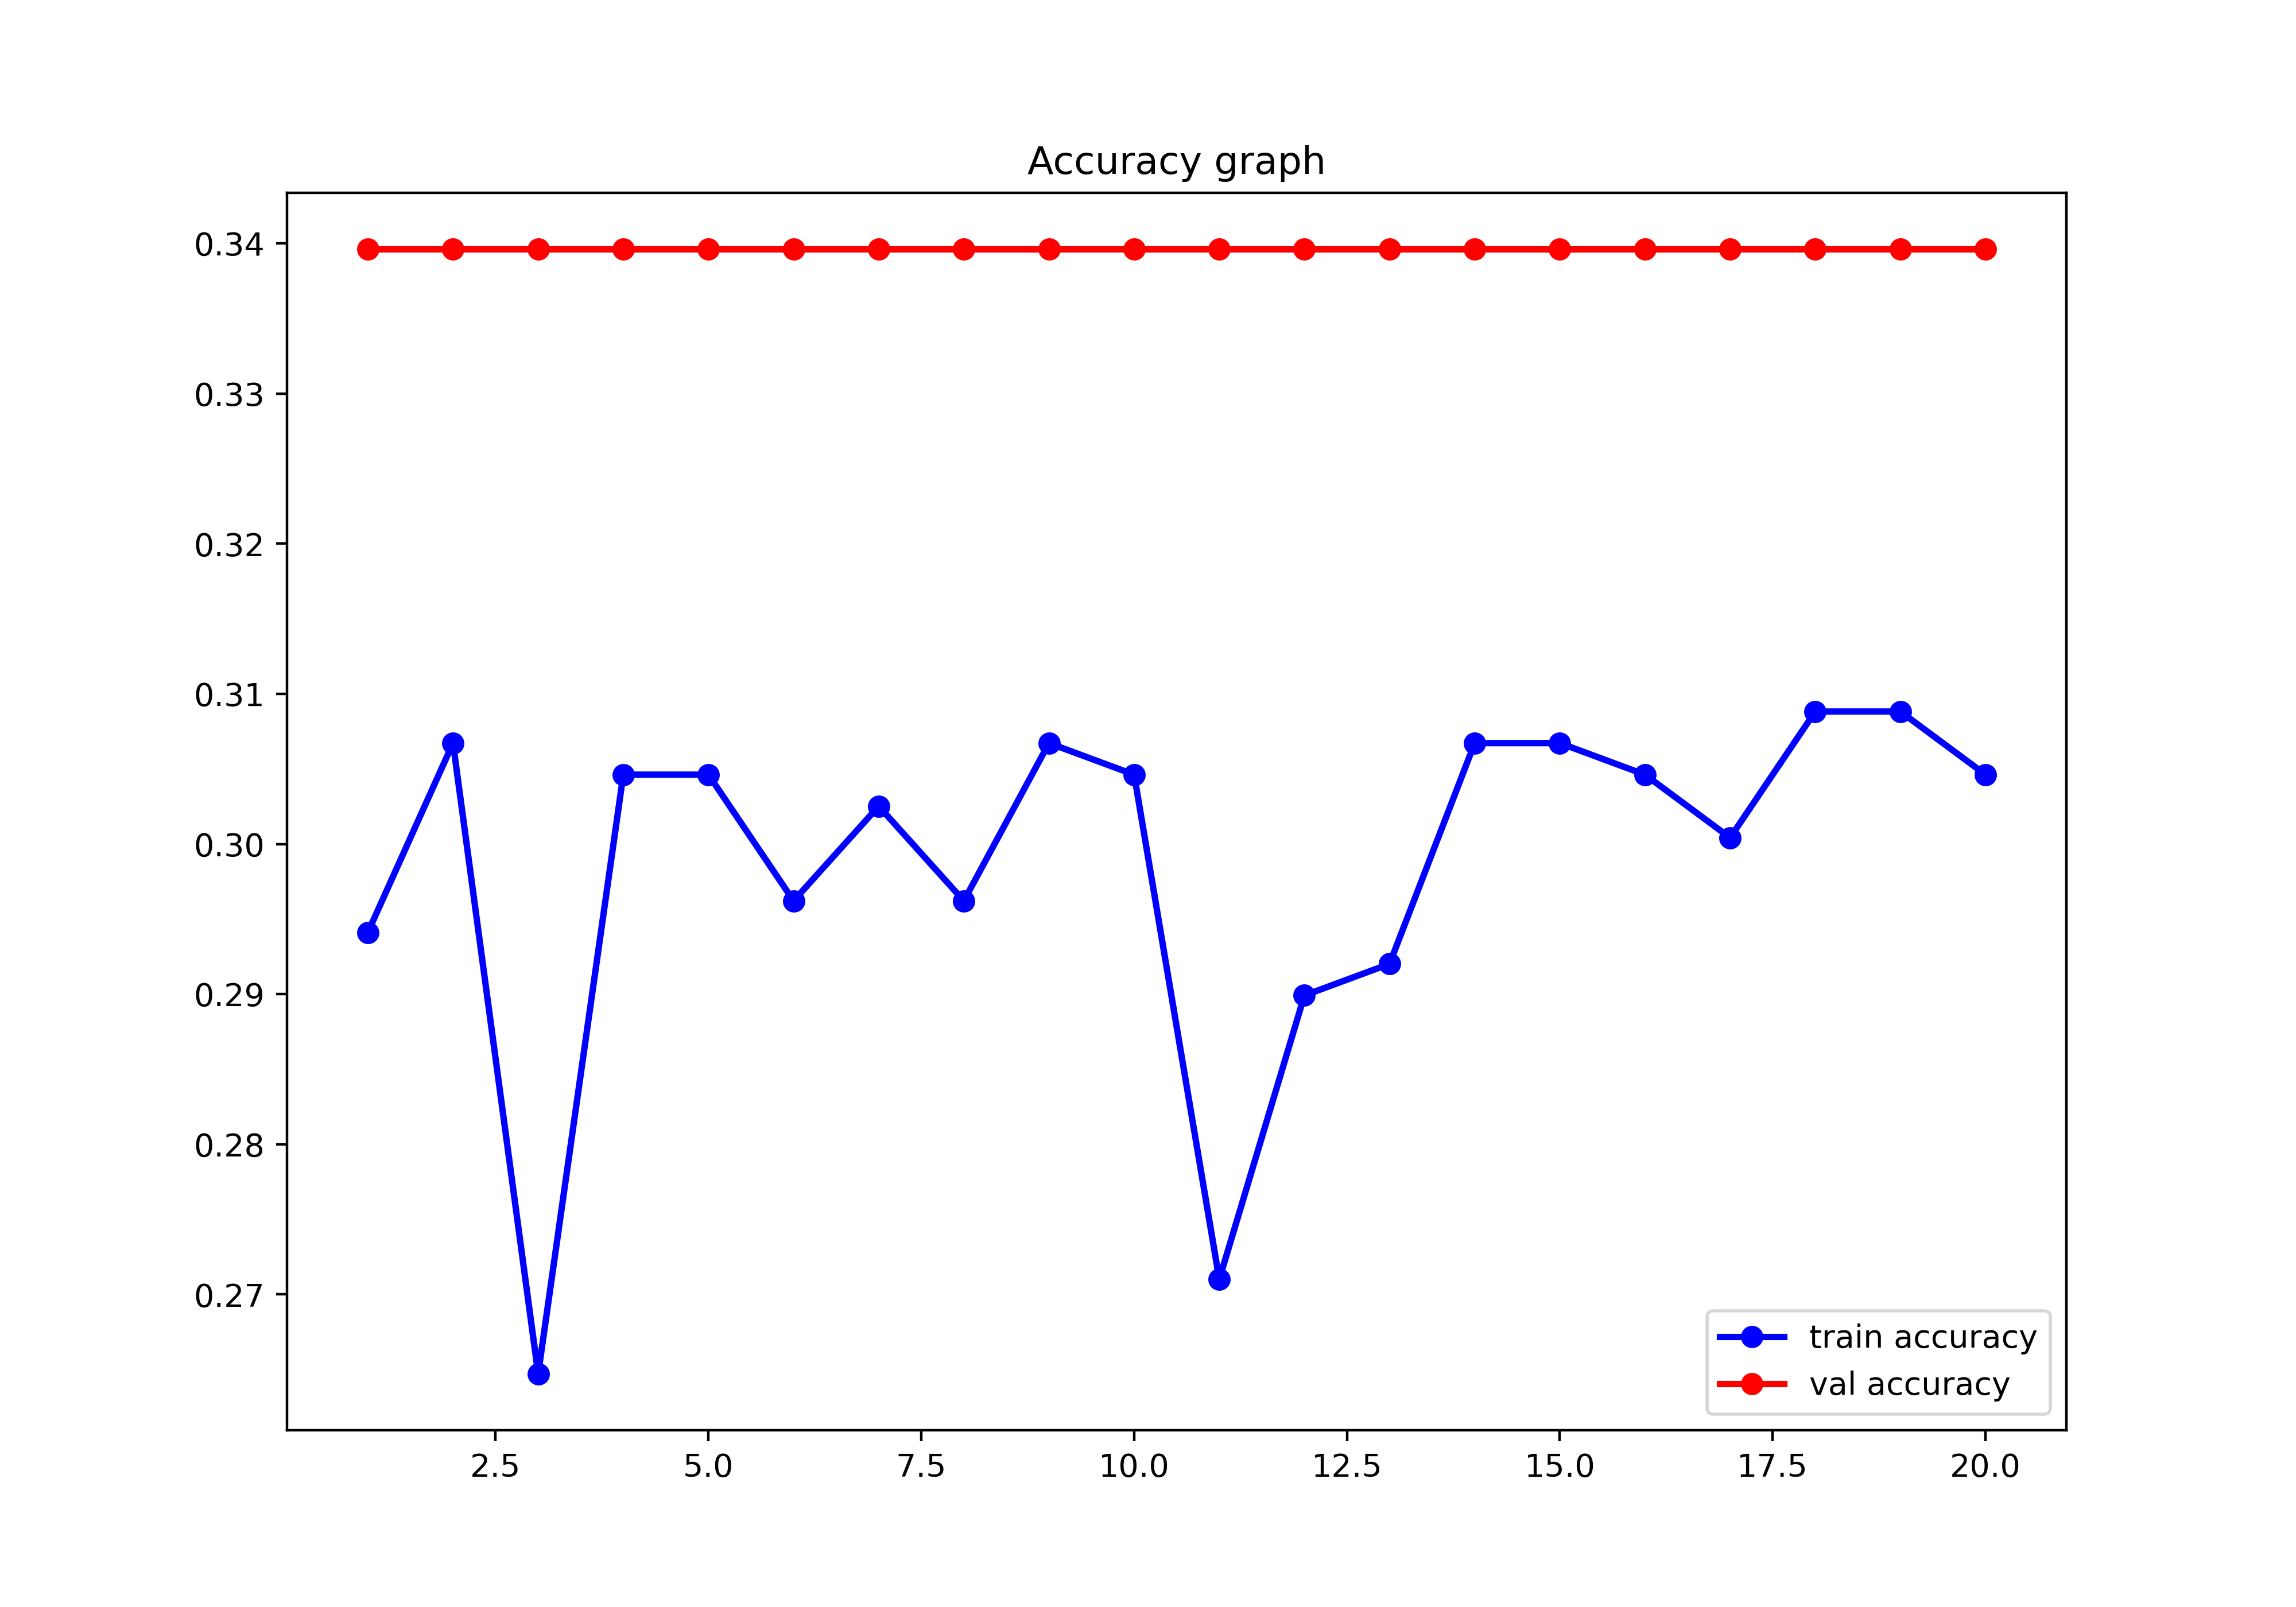 AlexNet accuracy graph